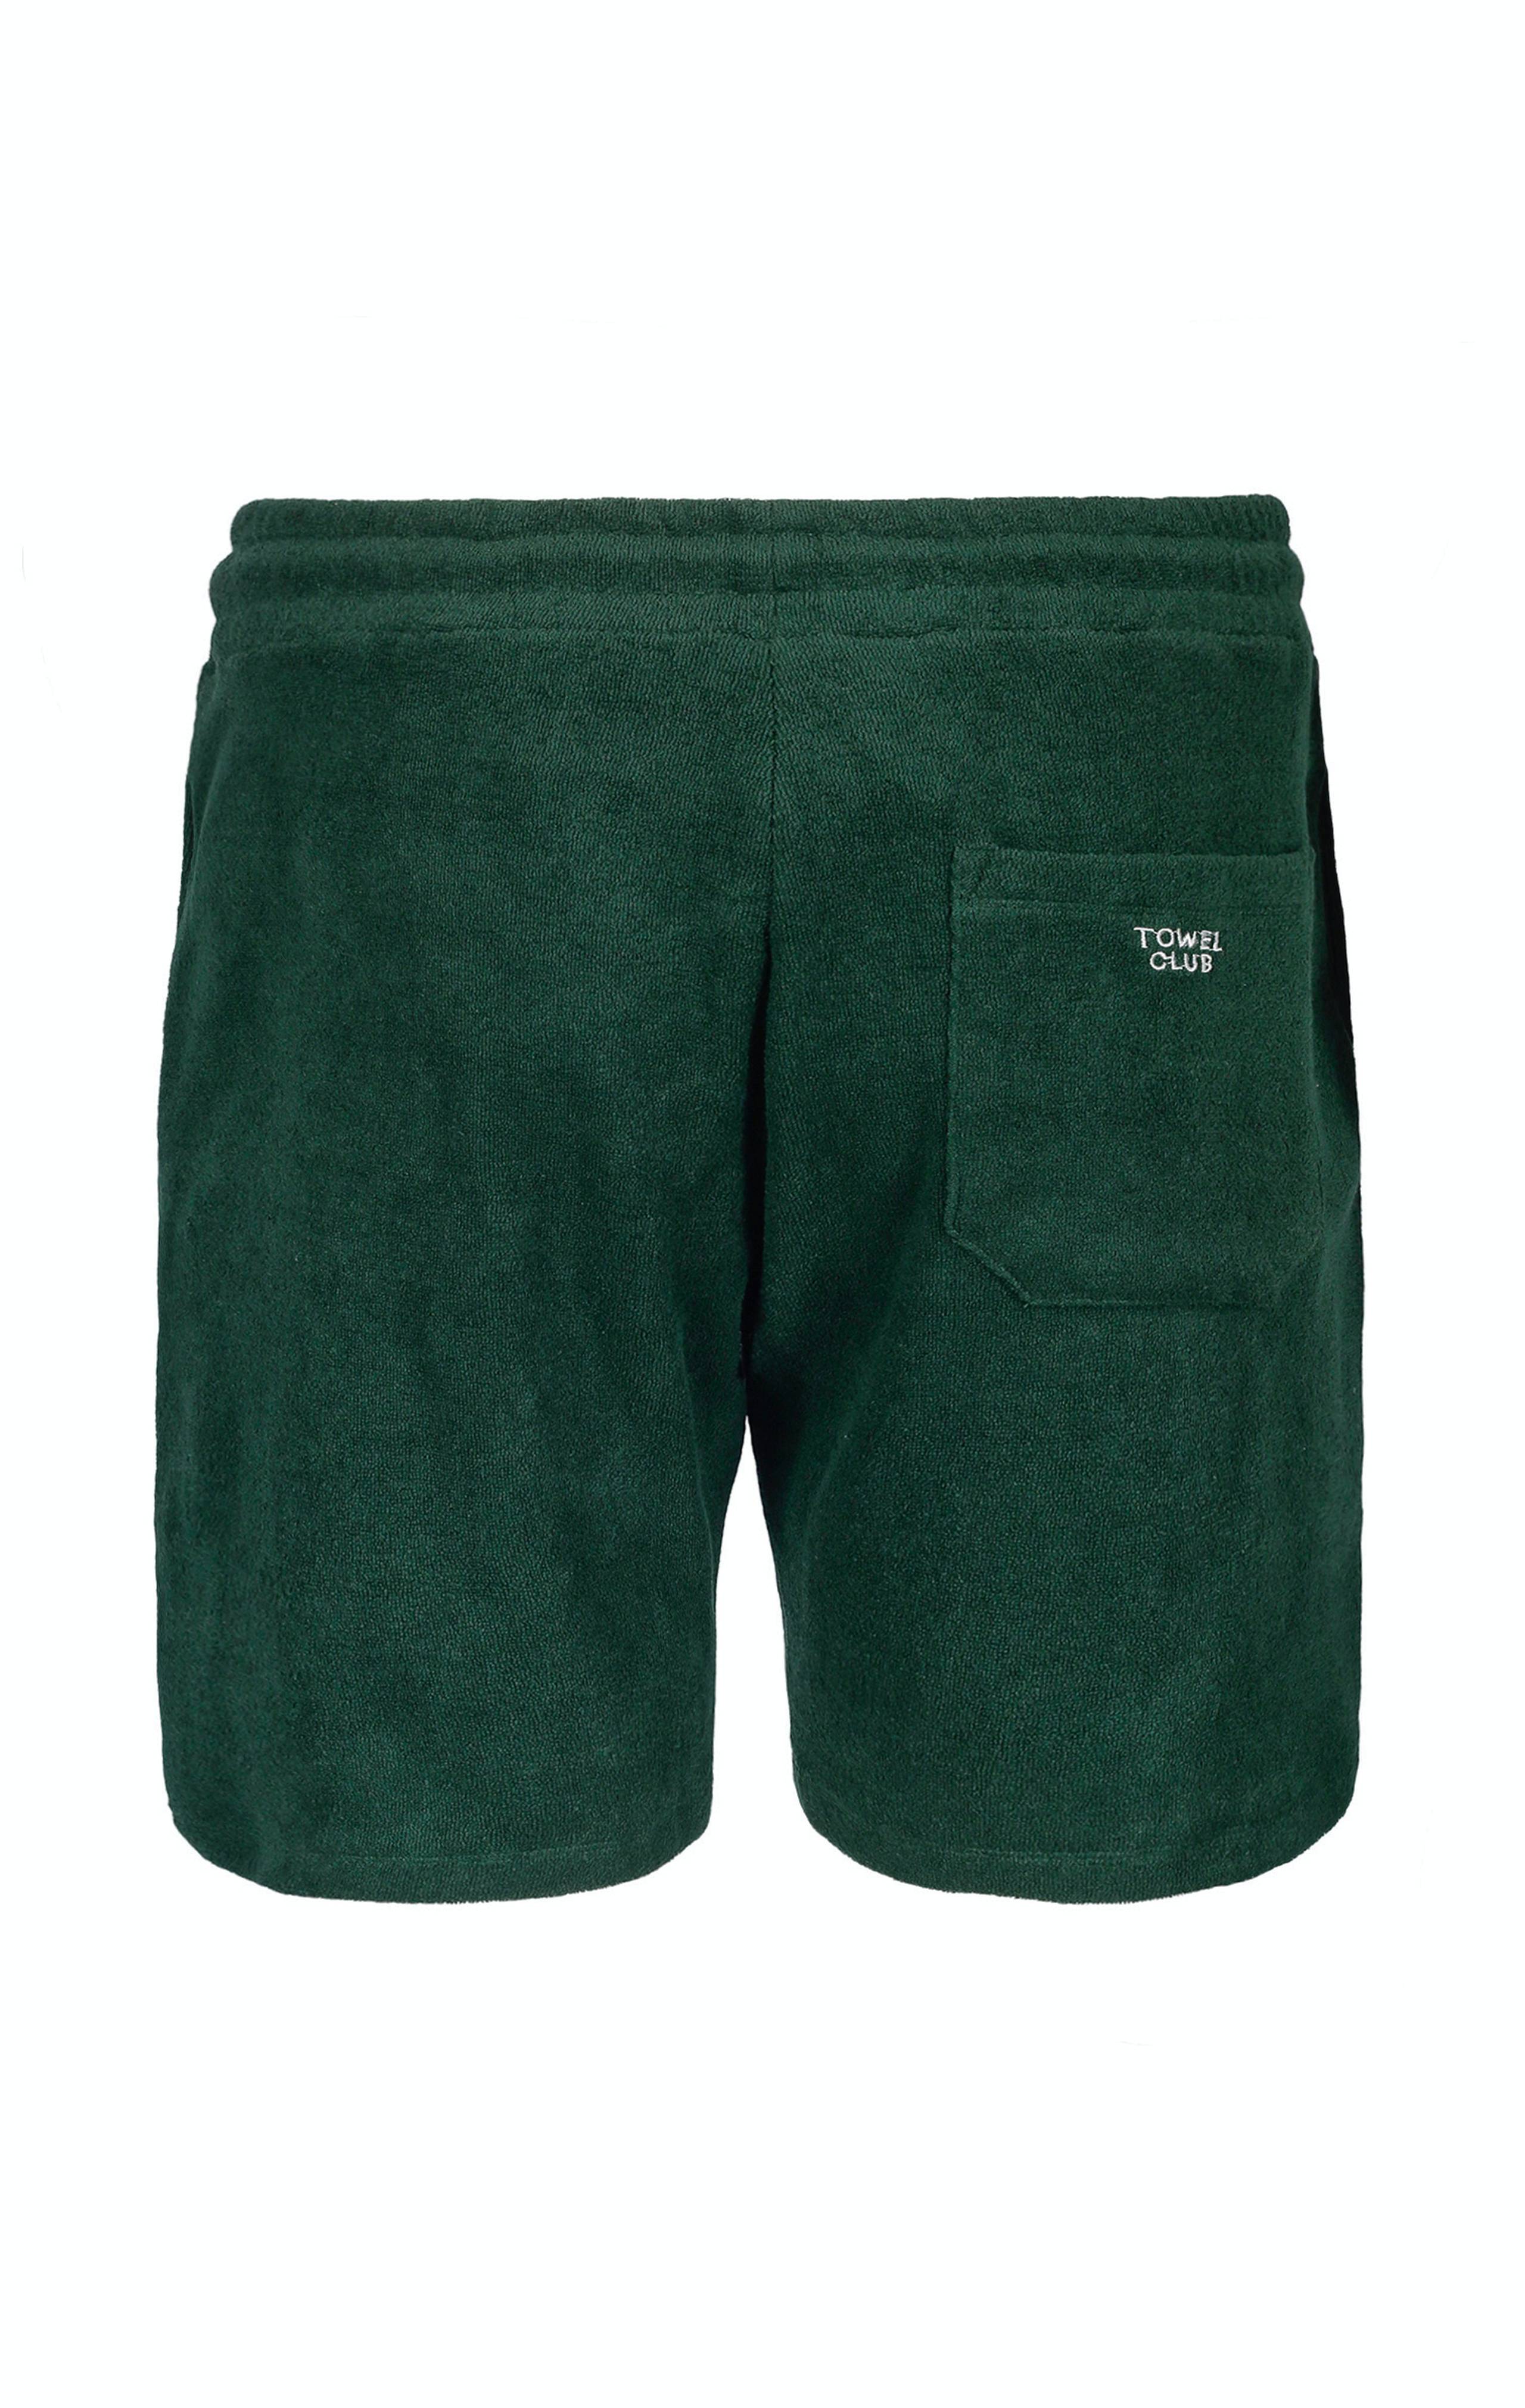 Onepiece Towel Club Shorts Green - 11